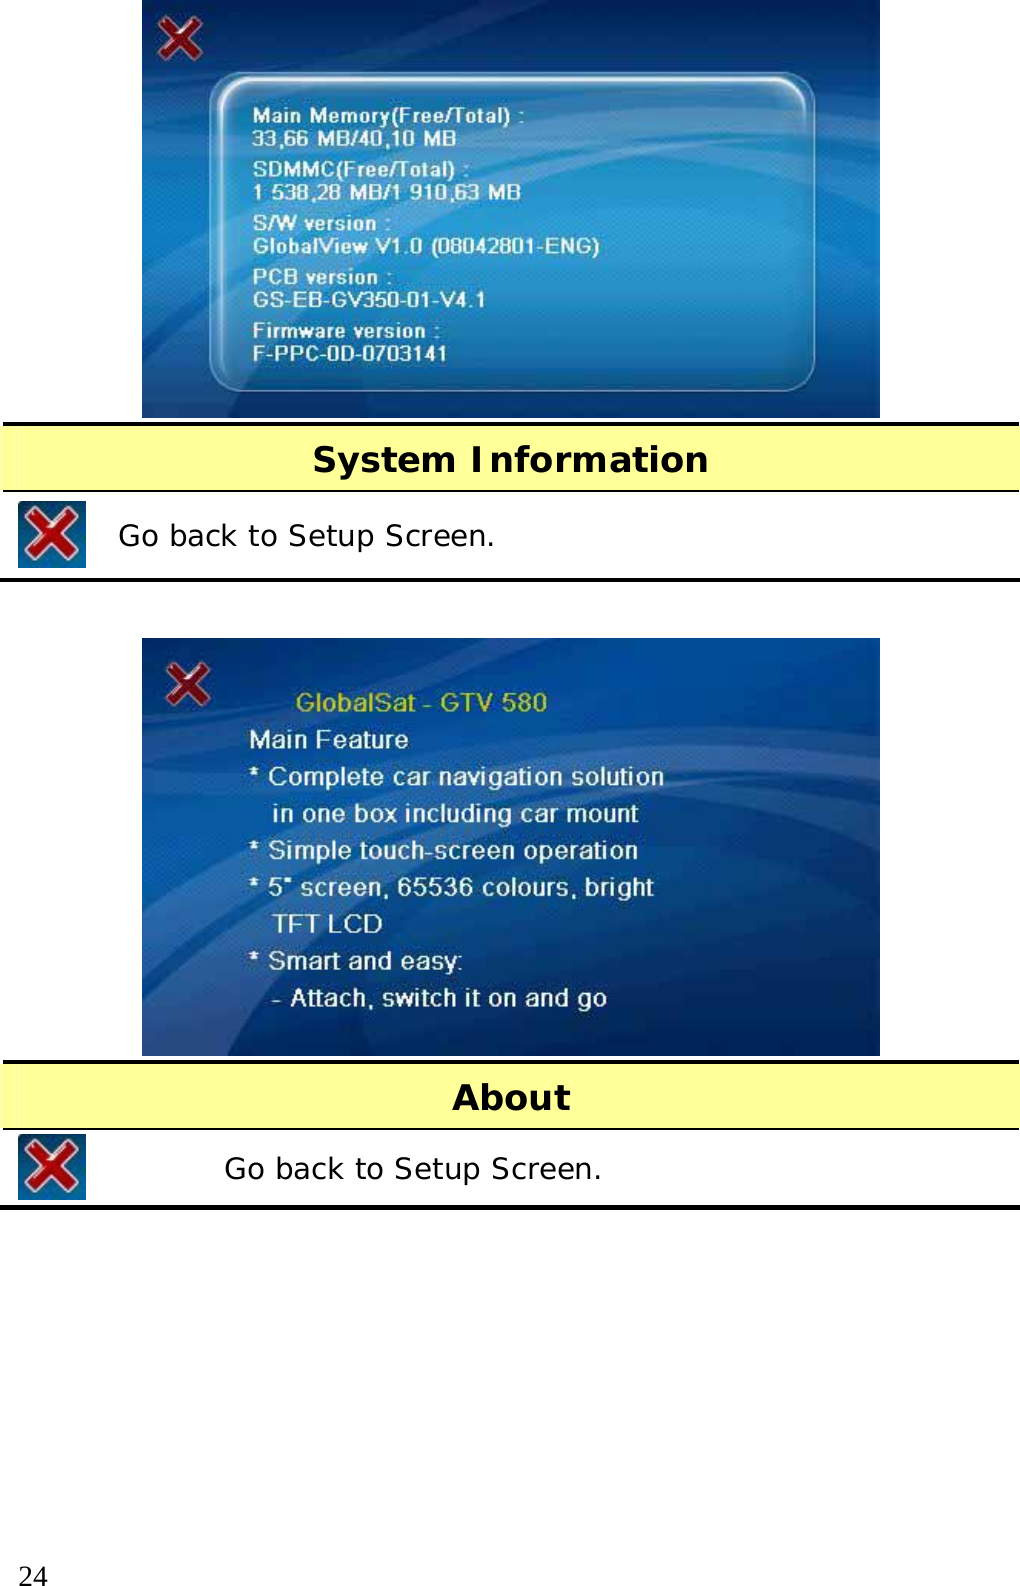  24  System Information  Go back to Setup Screen.   About  Go back to Setup Screen.  